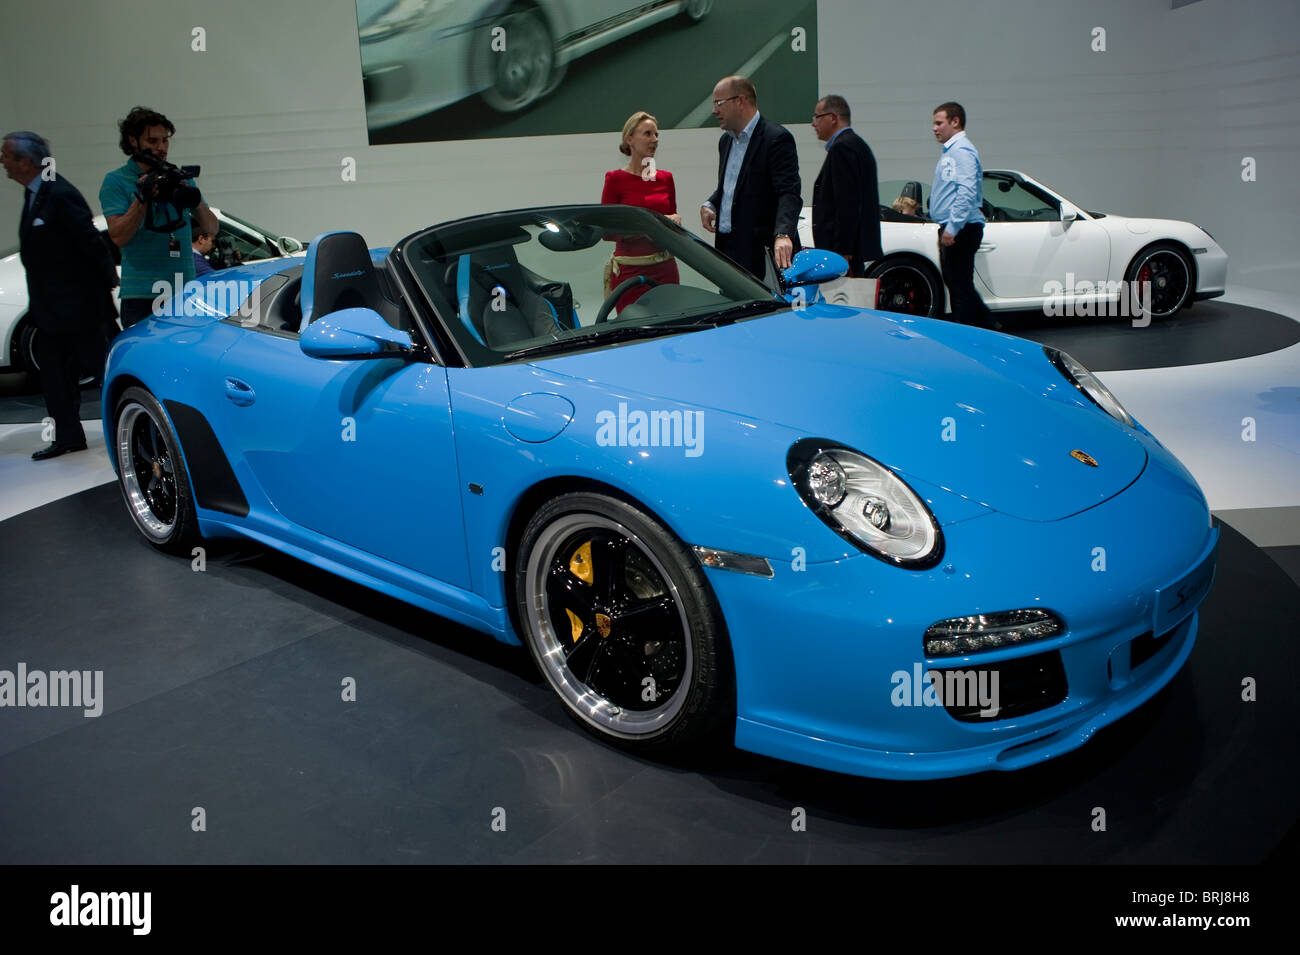 Paris, France, Paris Car Show, Porsche 911 Speedster, Sports car, $226,000. People Looking New Car Showroom Display, salon auto france Stock Photo